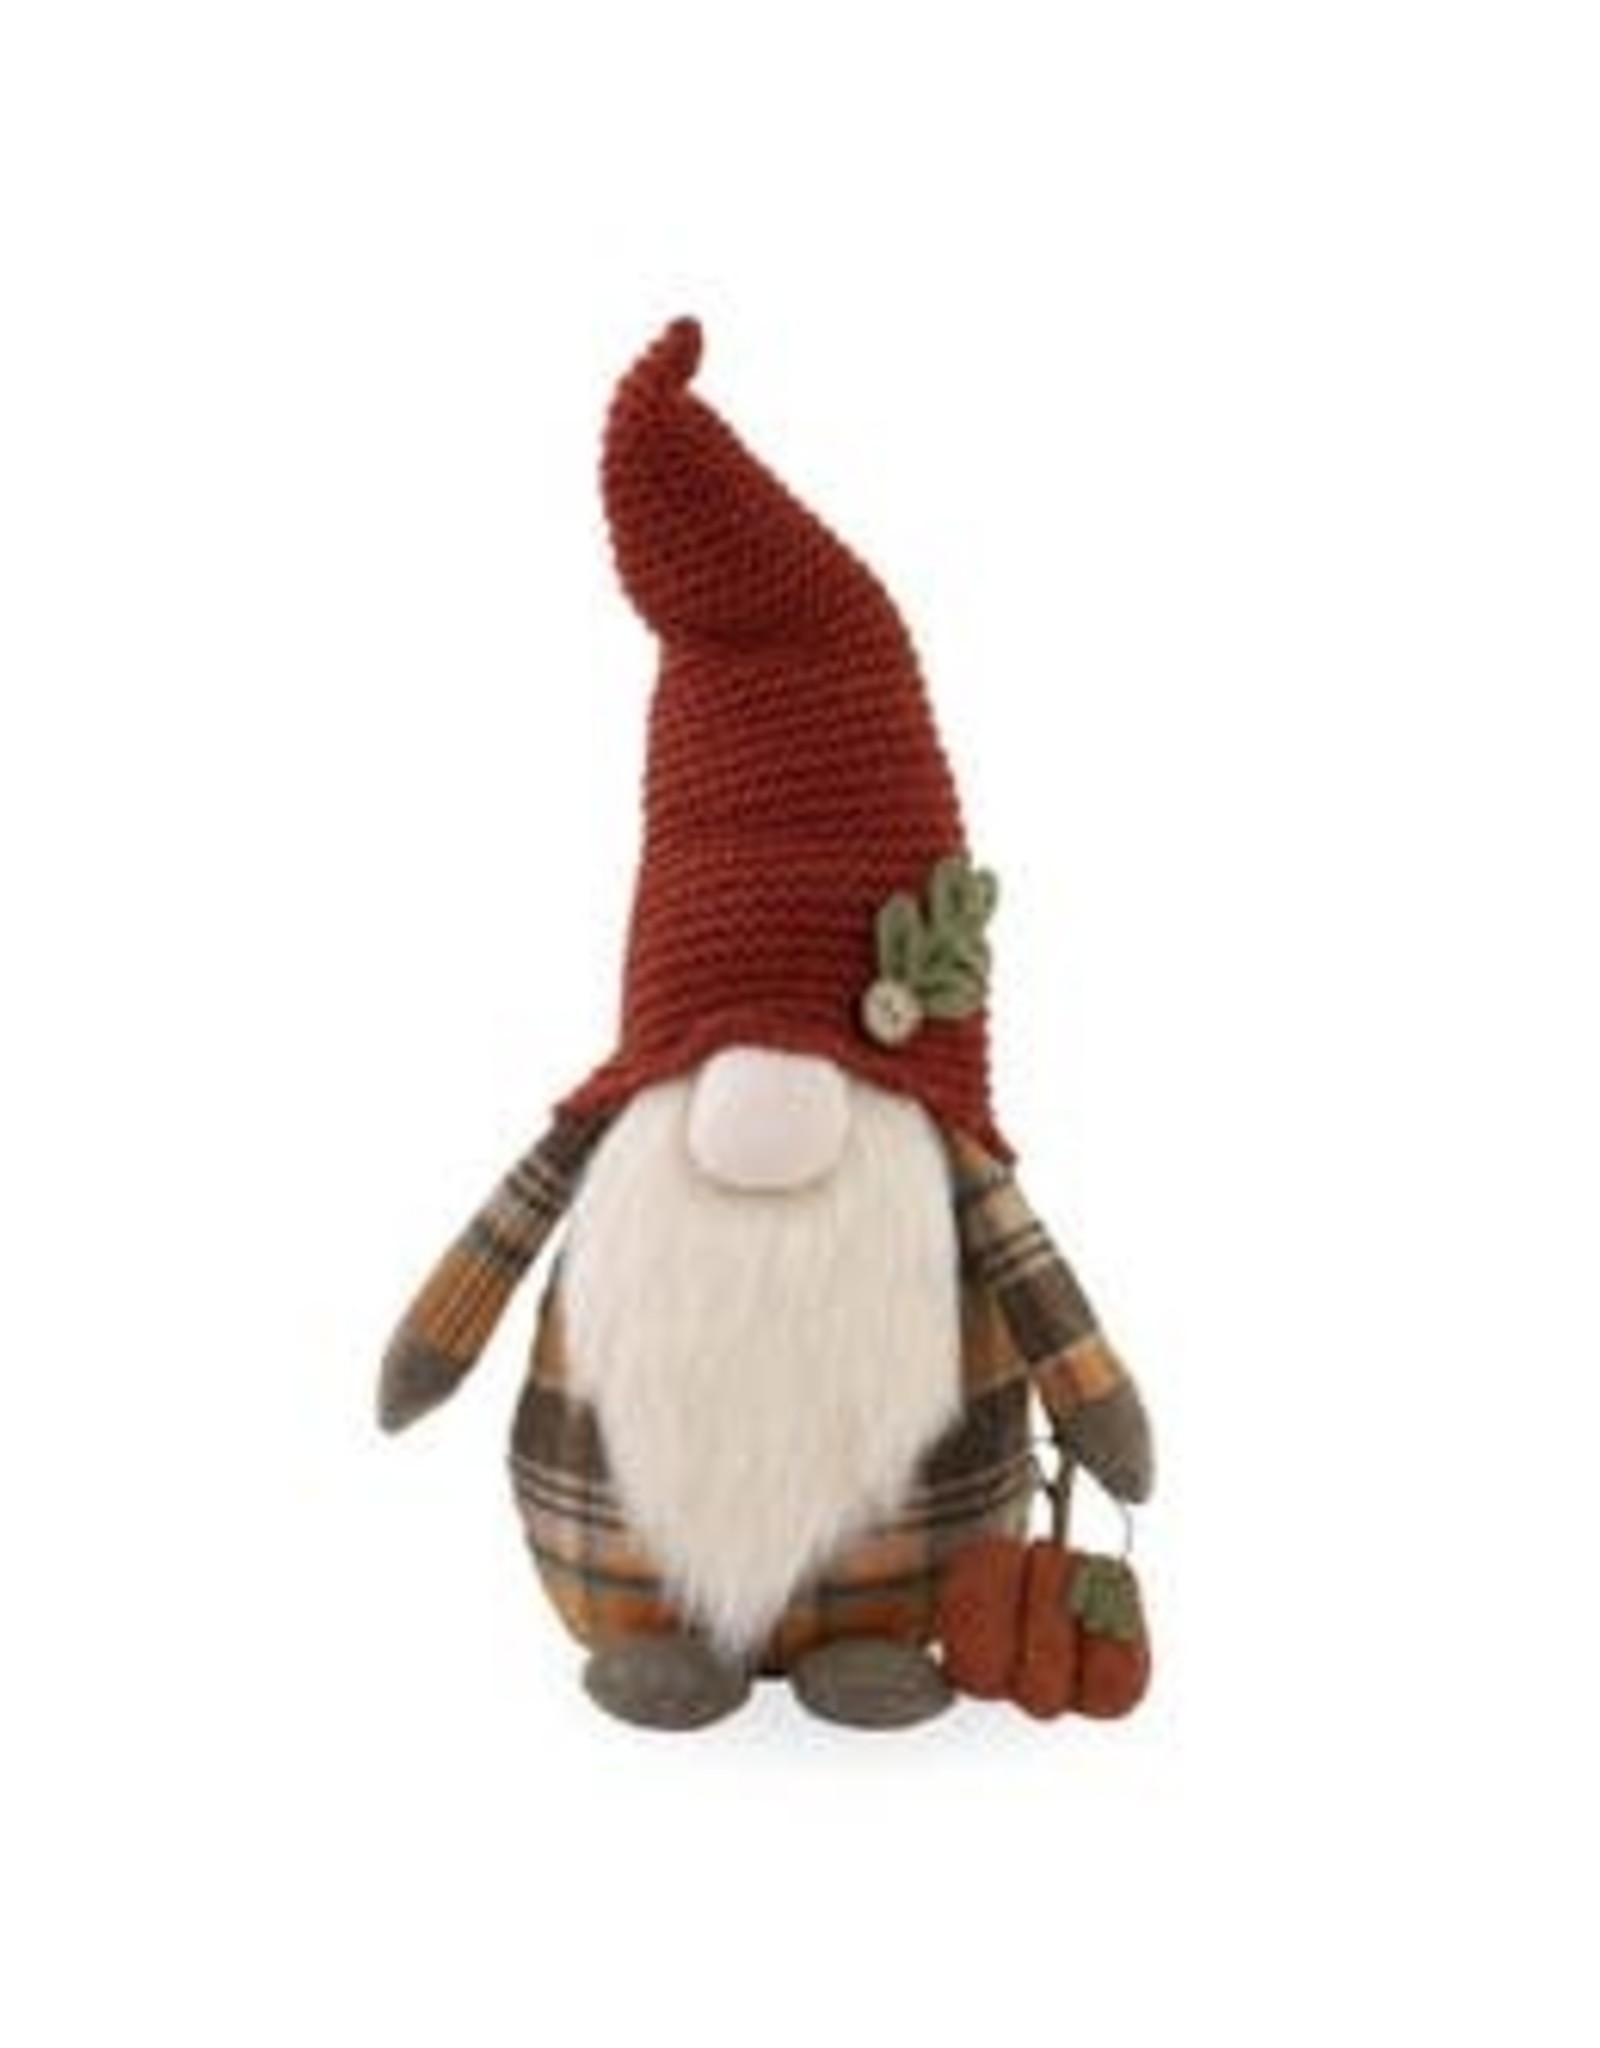 Cecil Autumn Plaid Gnome